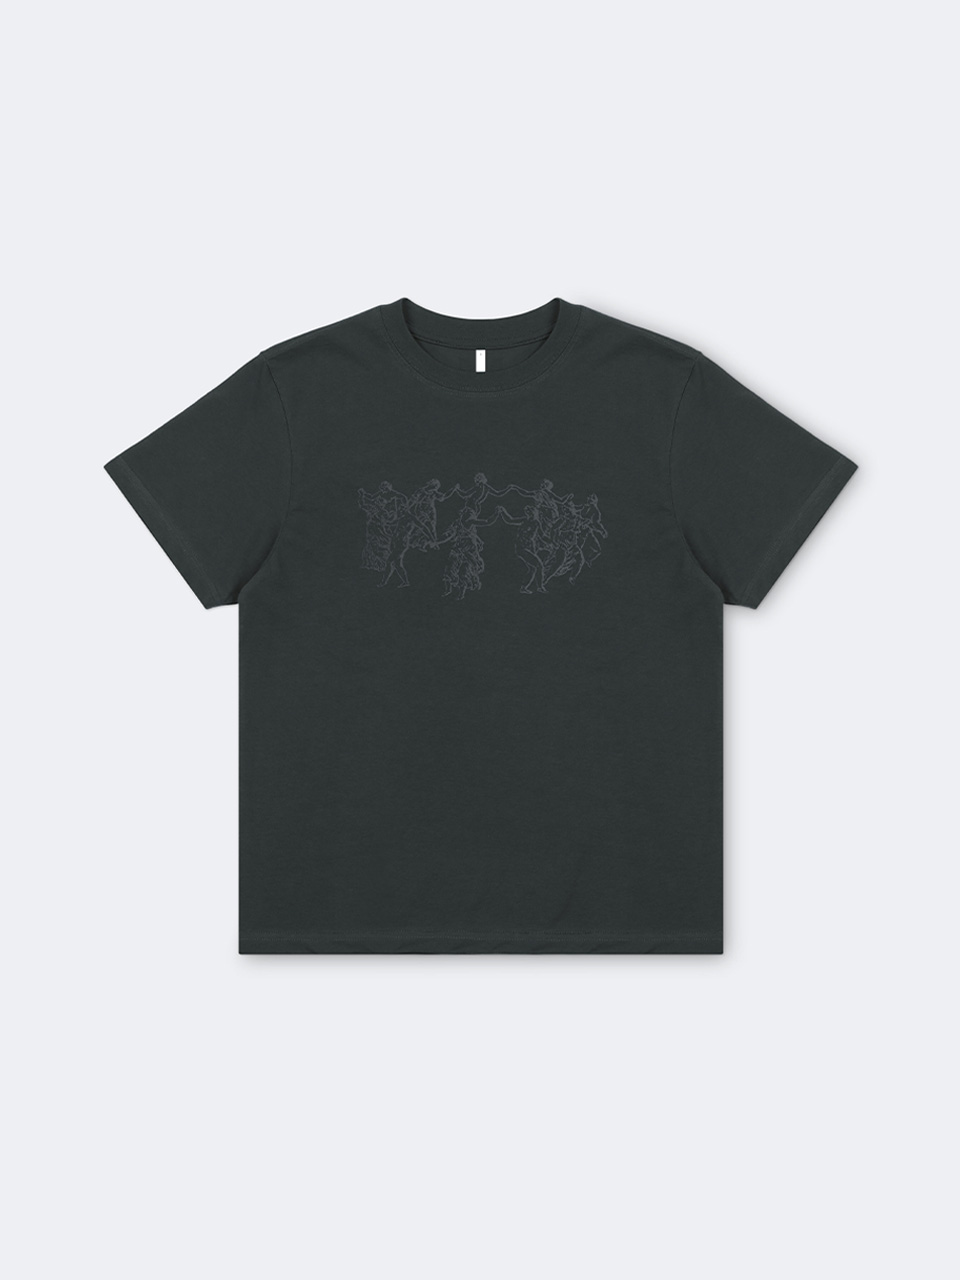 Dancing nymphs T-shirt charcoal